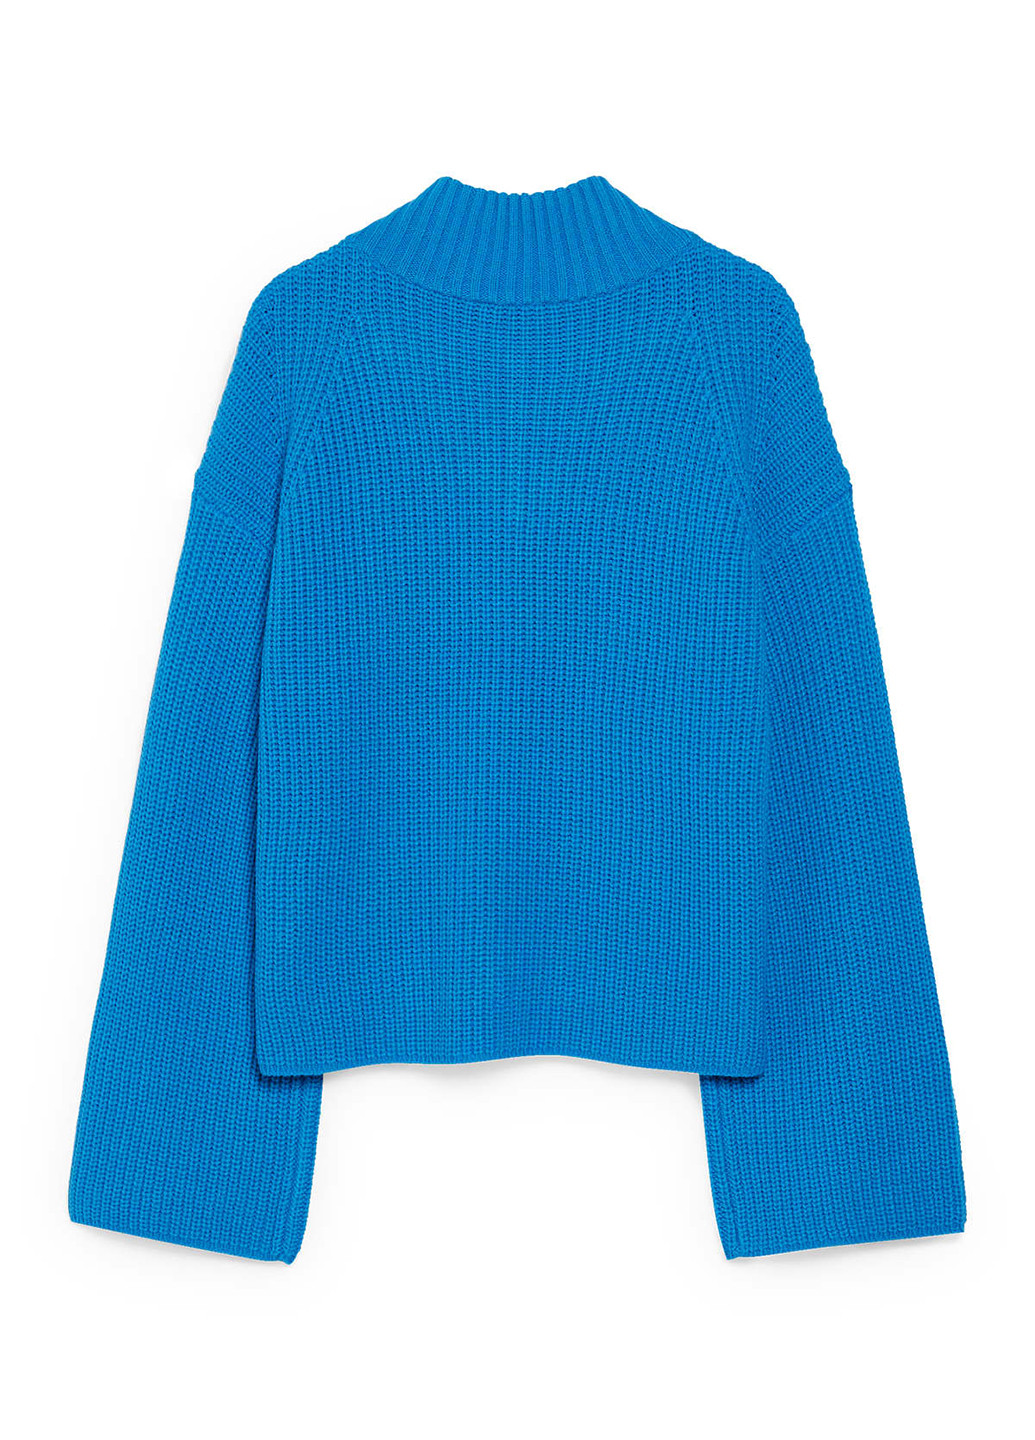 Светло-синий зимний пуловер пуловер C&A